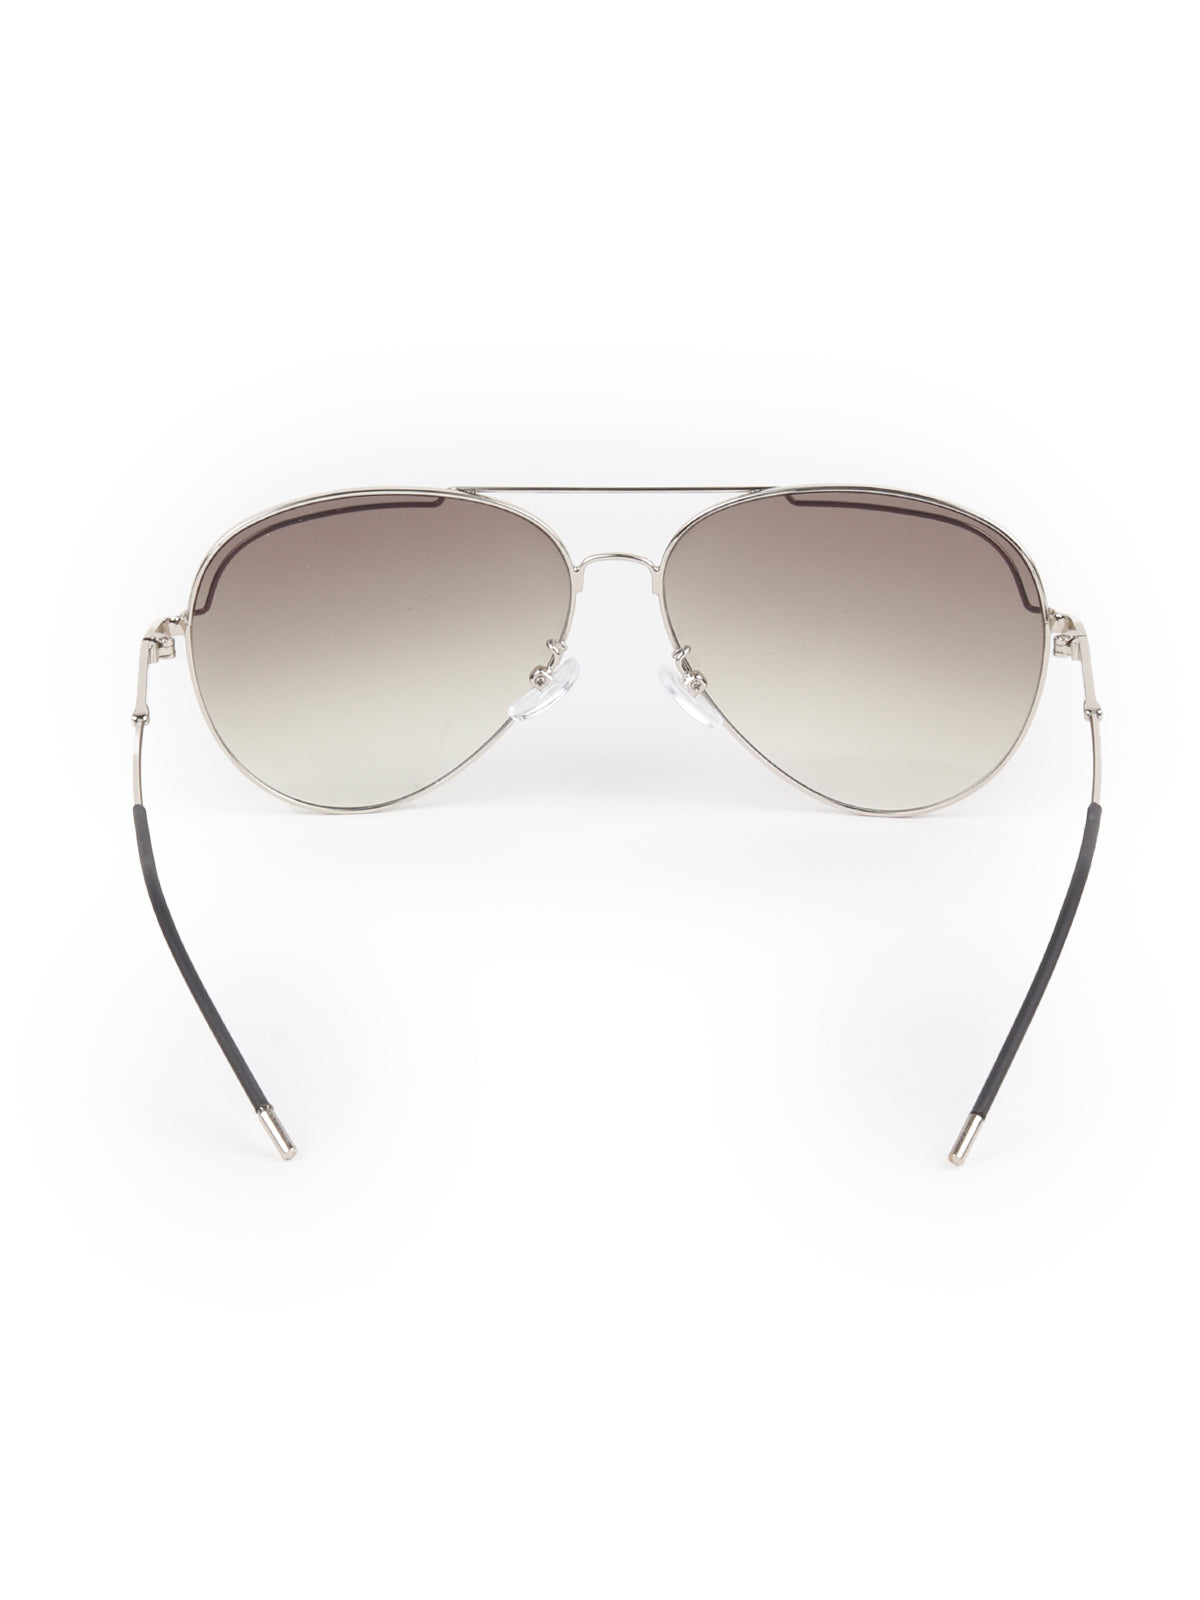 Odette Green Acrylic Aviator Sunglasses for Women